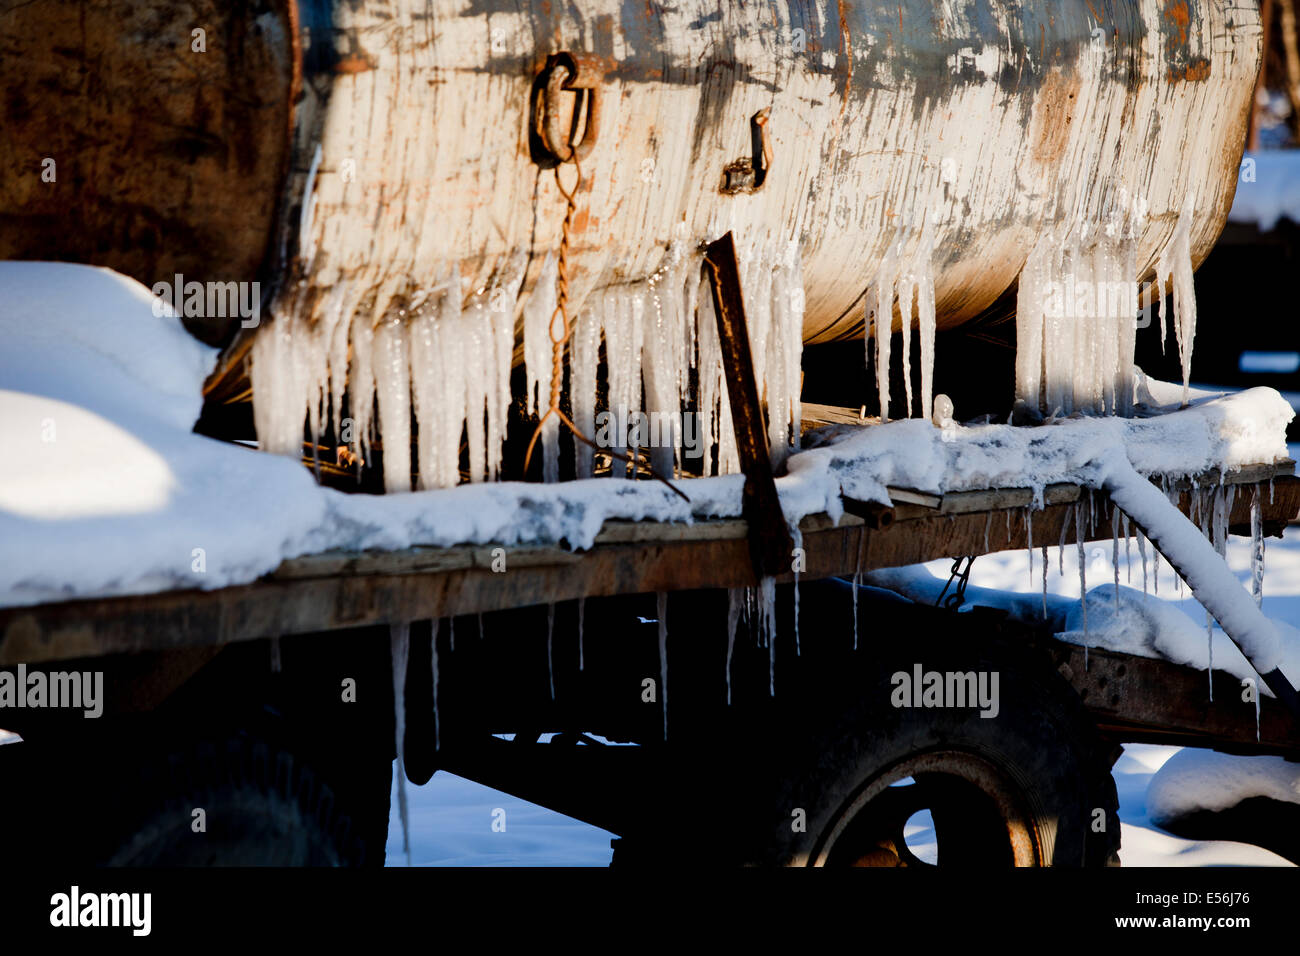 Maquinaria agrícola congelados nieve carámbanos oxidados Foto de stock